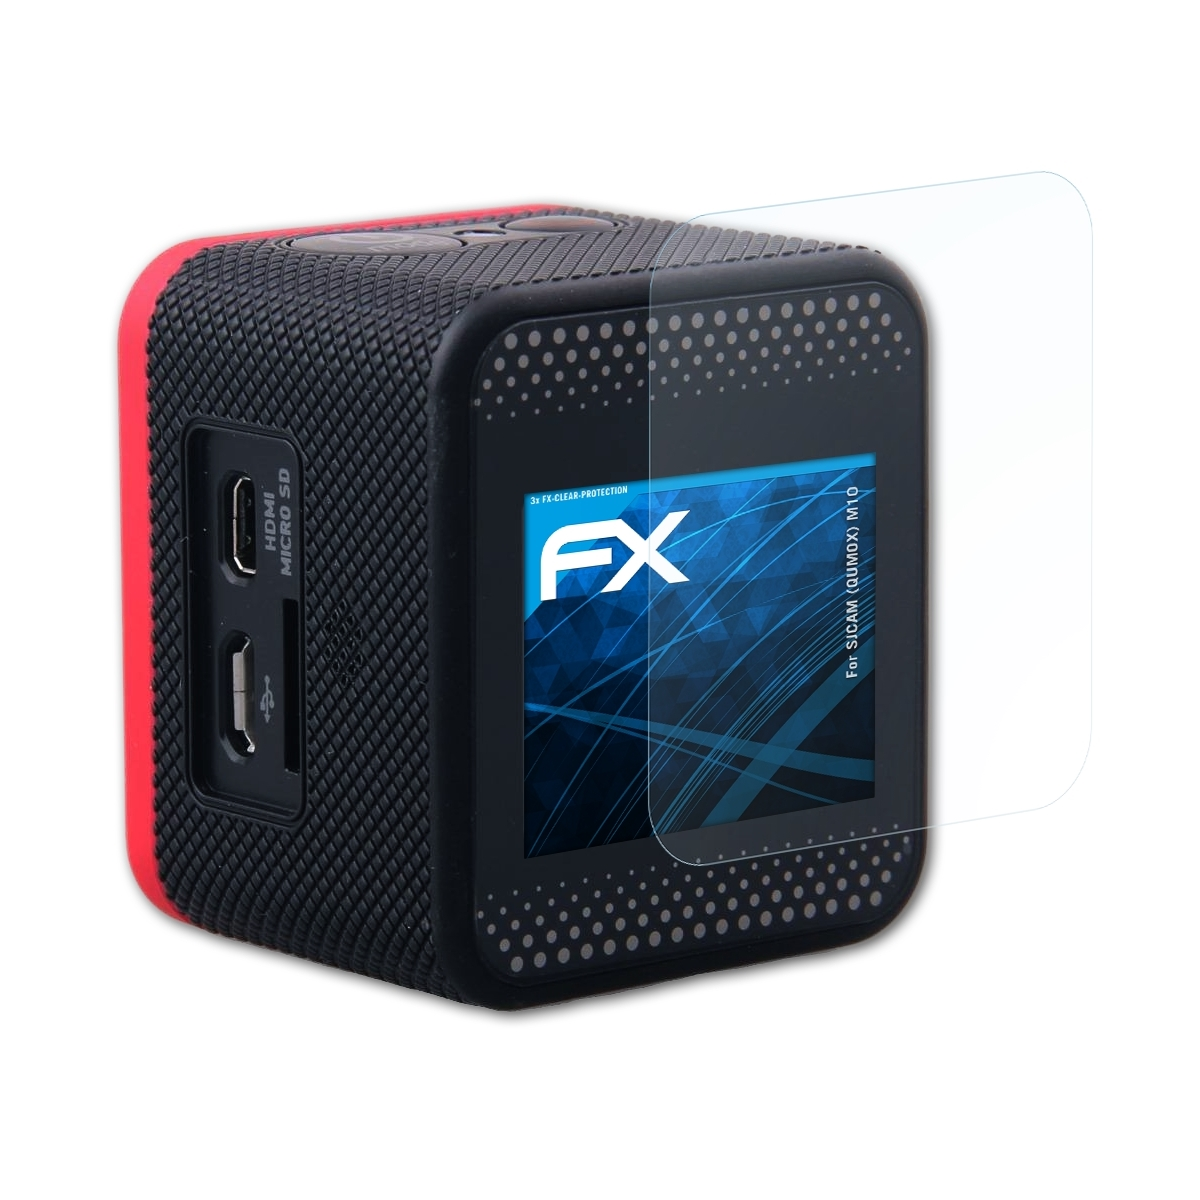 M10) FX-Clear (QUMOX) Displayschutz(für SJCAM ATFOLIX 3x